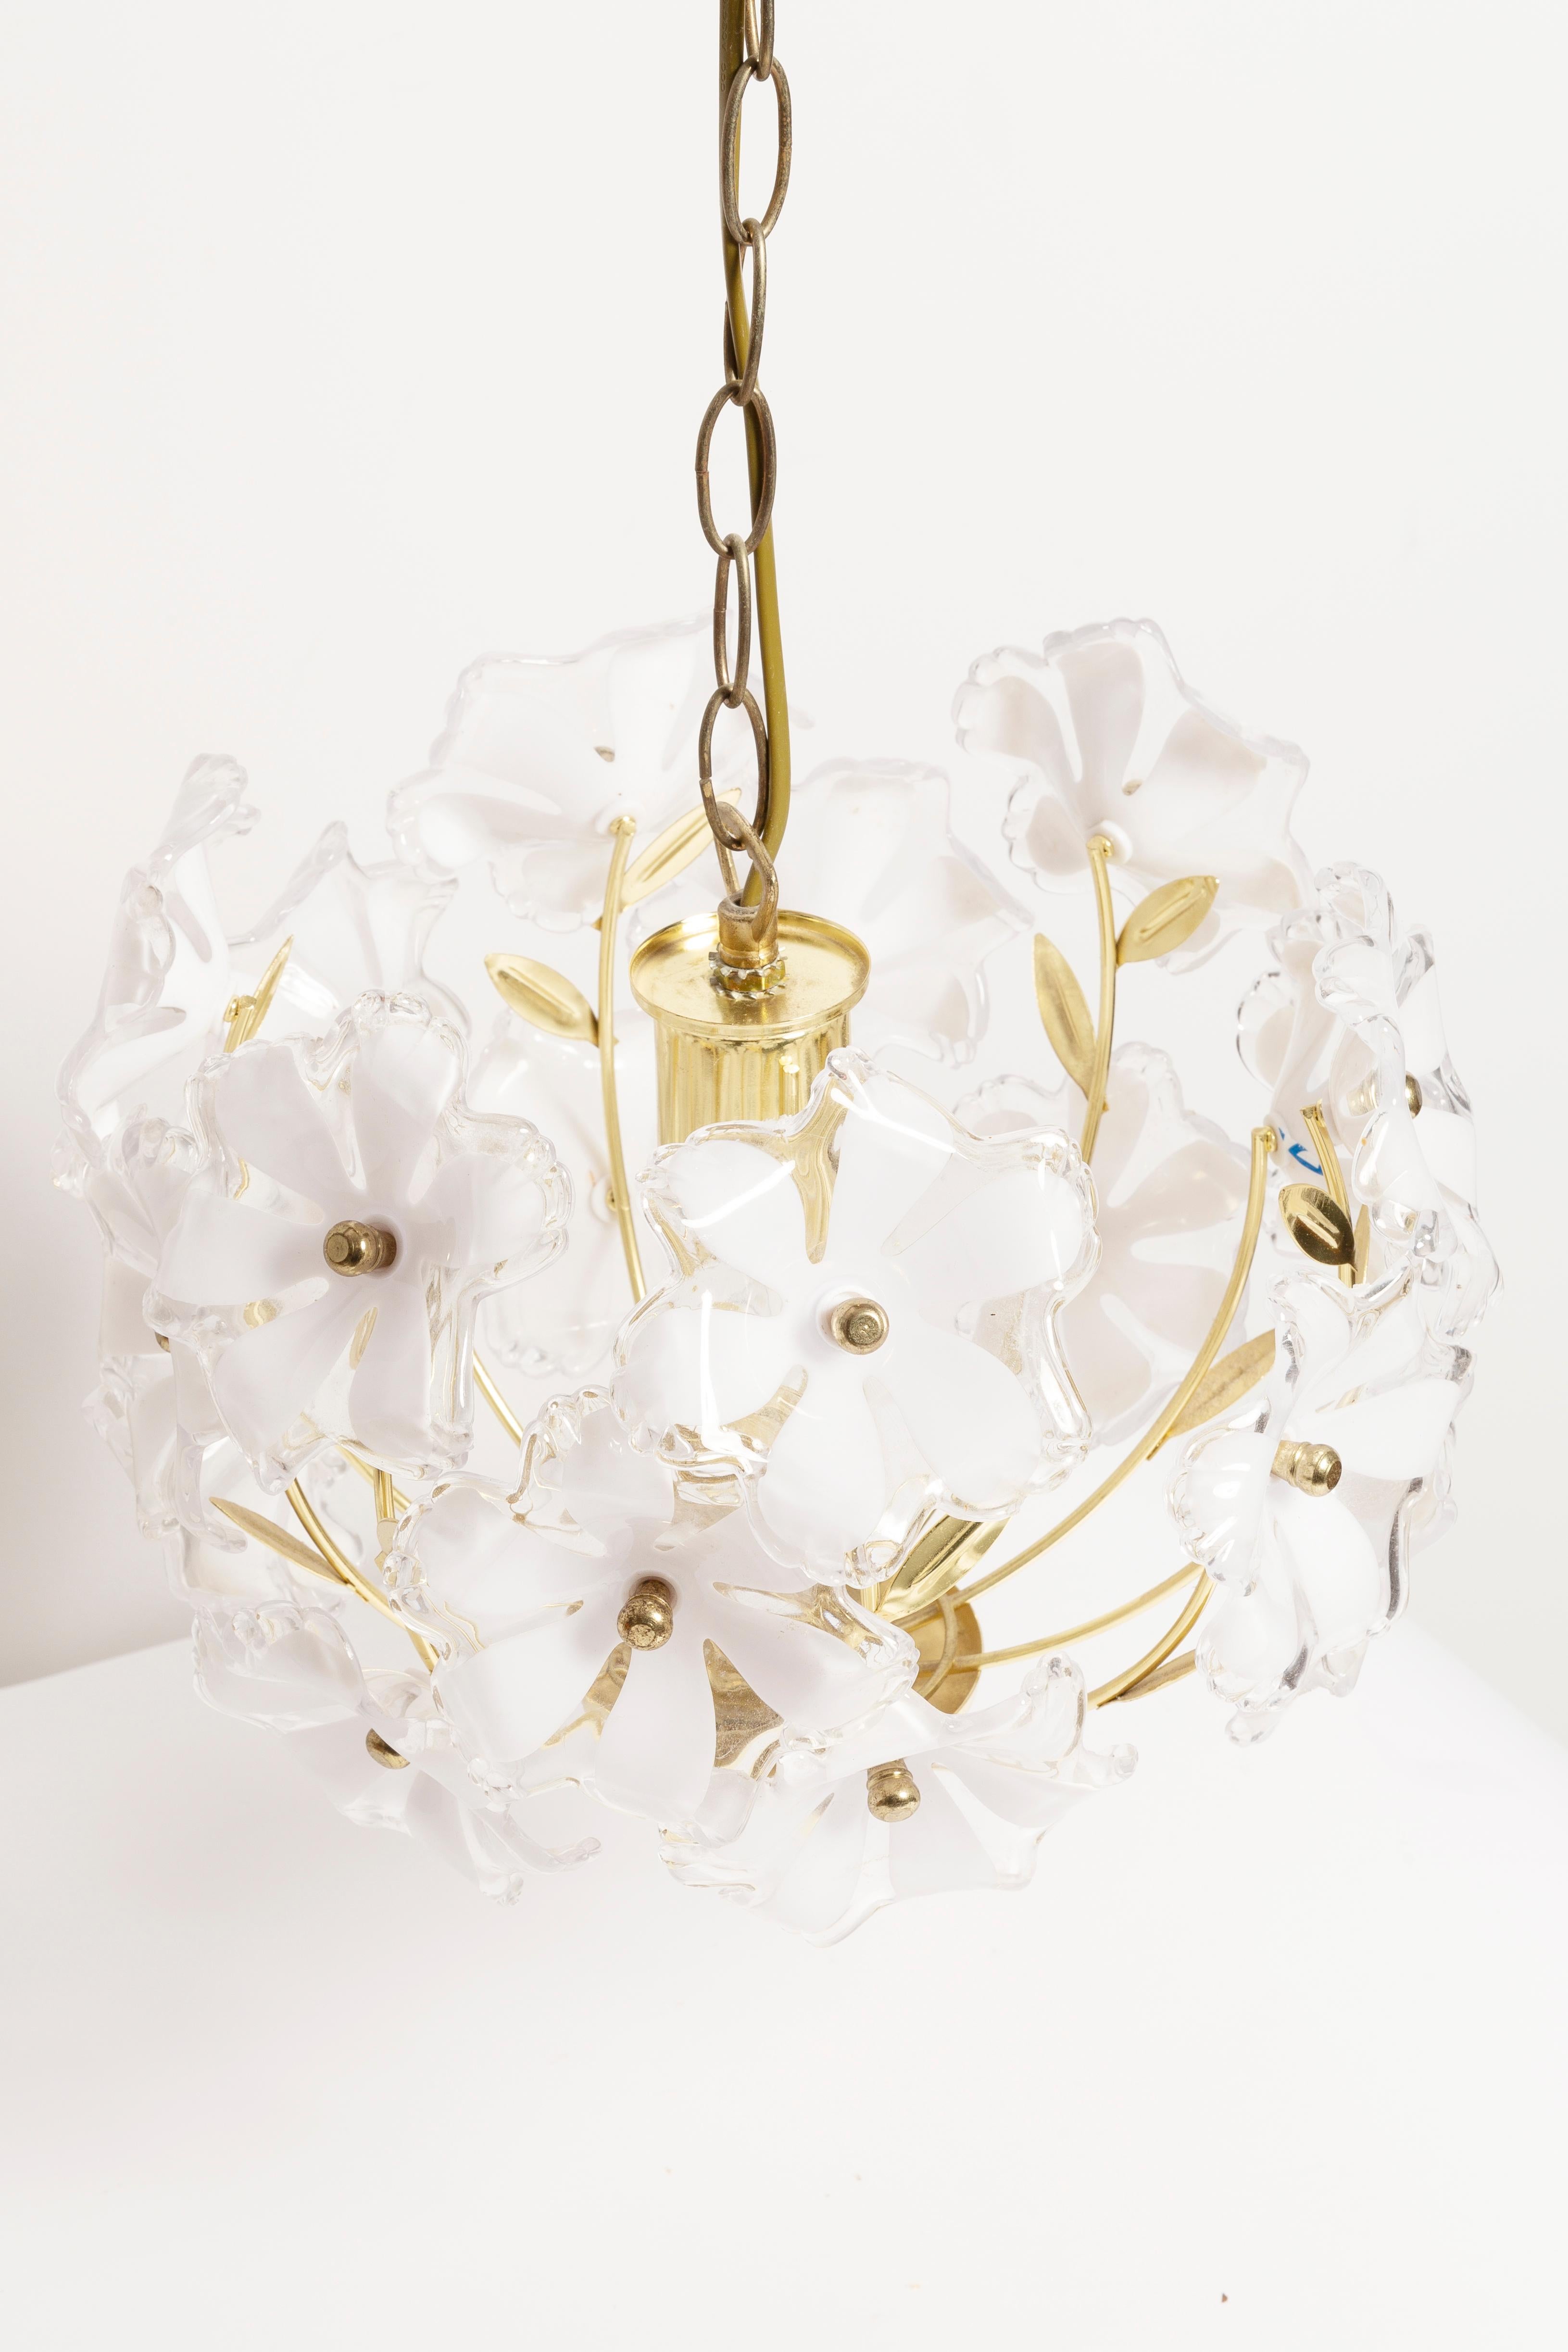 Mid Century, Hollywood Regency Medium Ceiling Lamp, White Flowers, Italy, 1960s For Sale 2